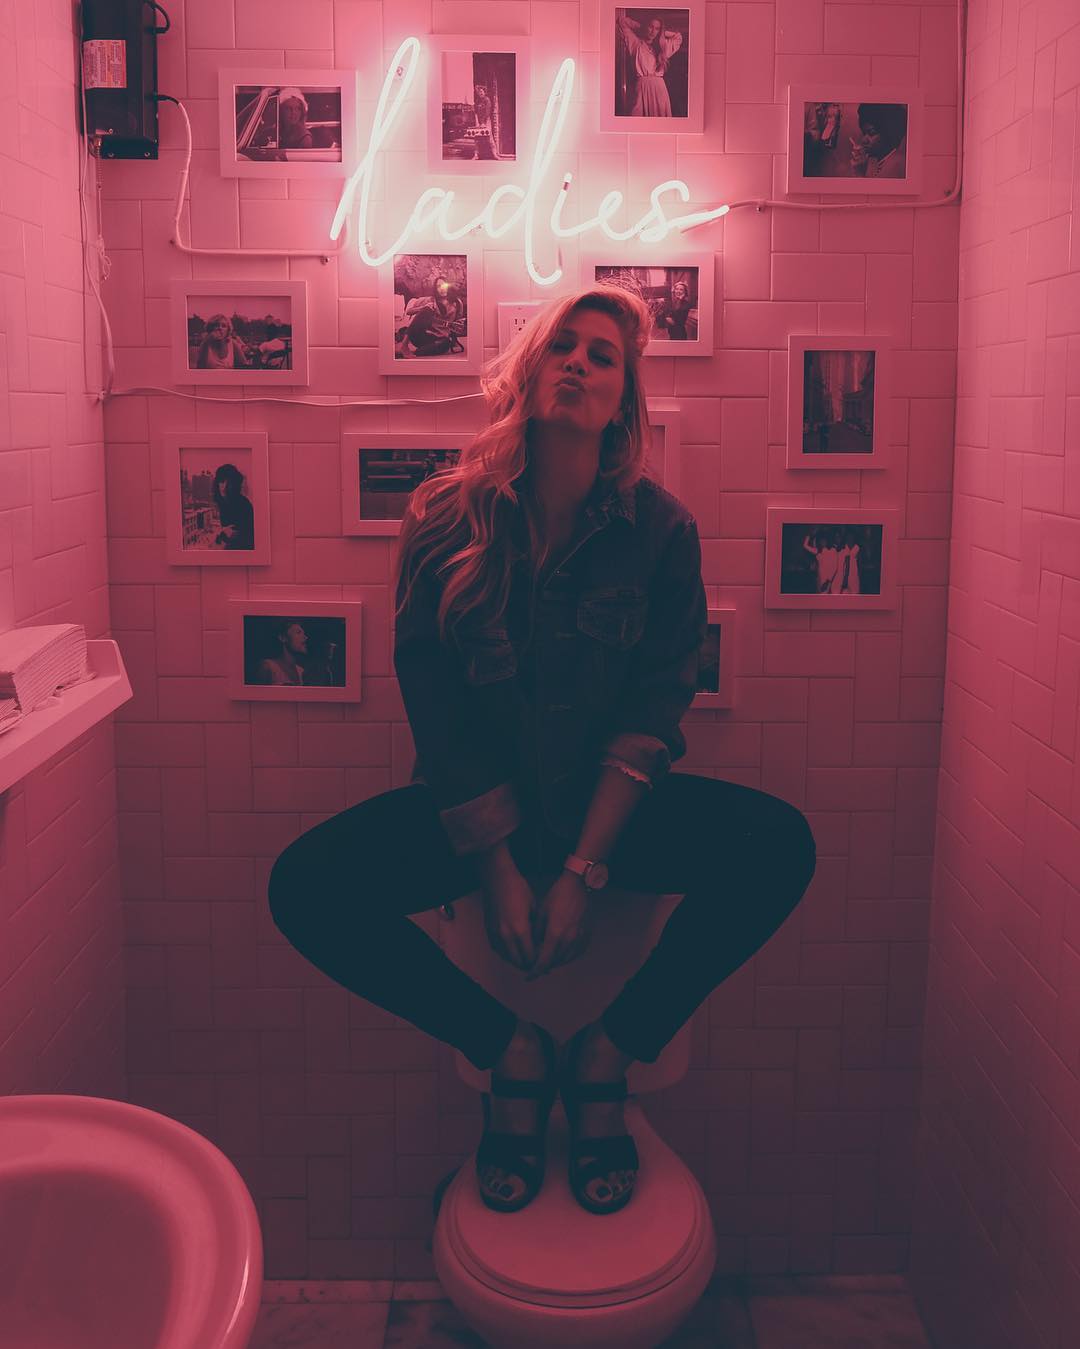 ladies neon pink sign in bathroom